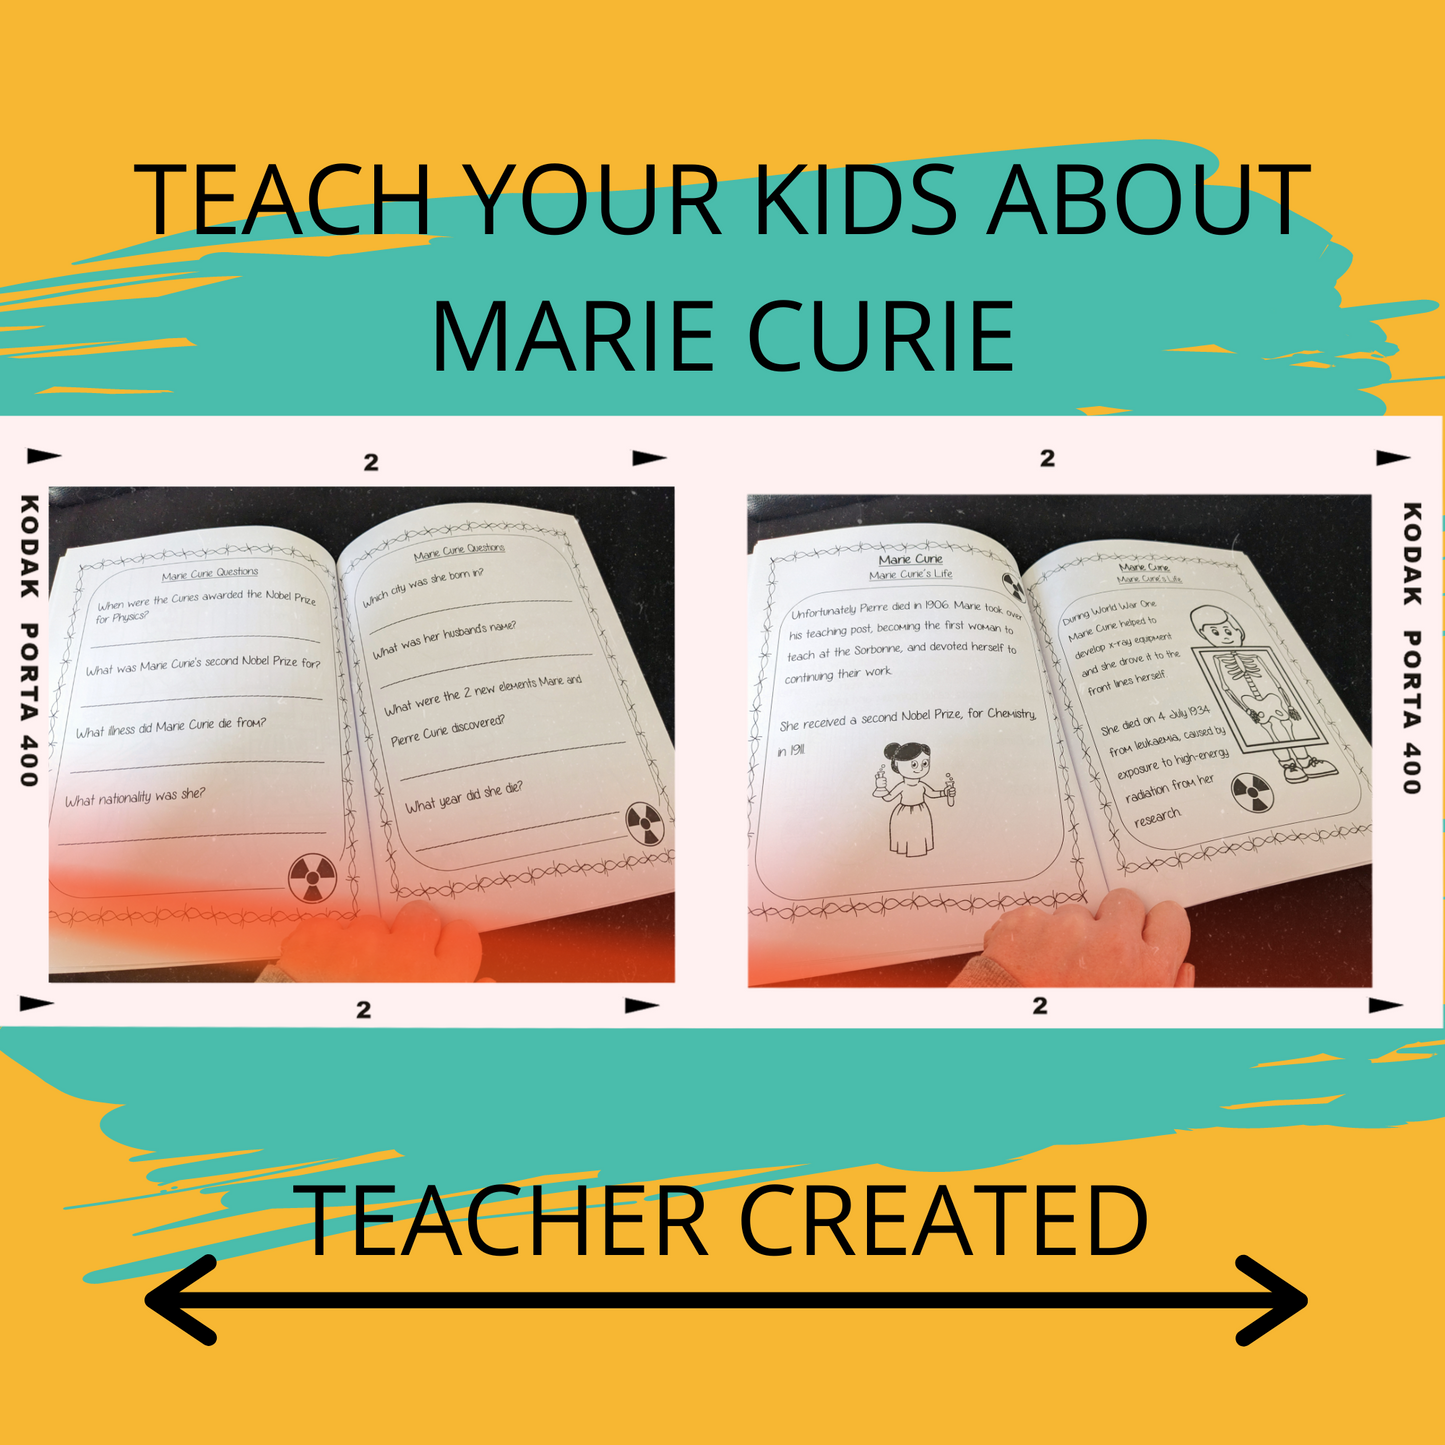 Marie Curie Workbook